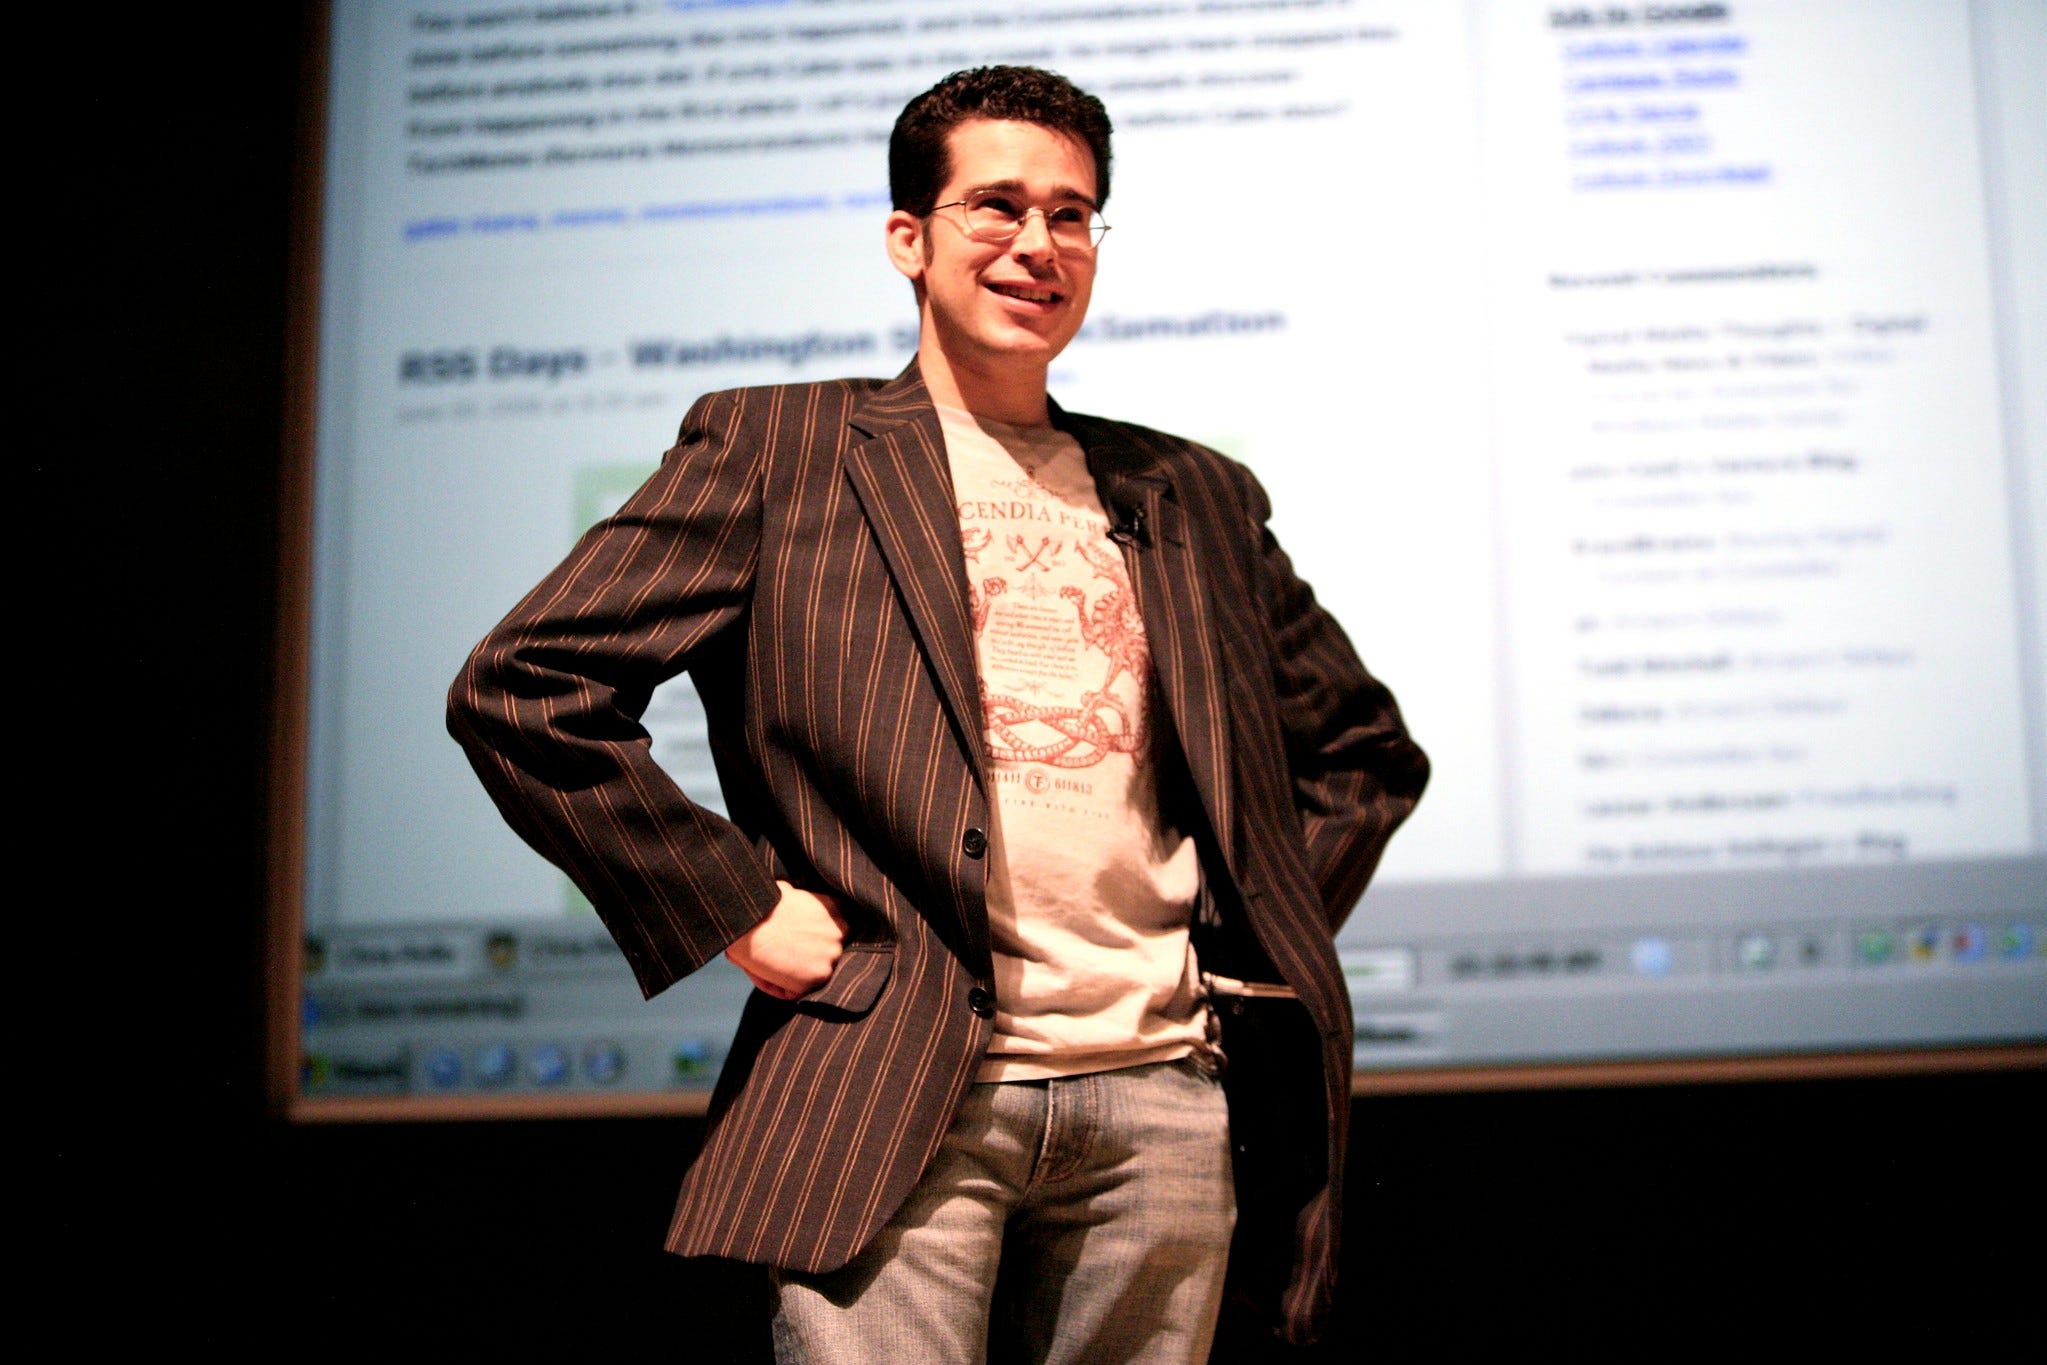 Gnomedex founder and MC Chris Pirillo